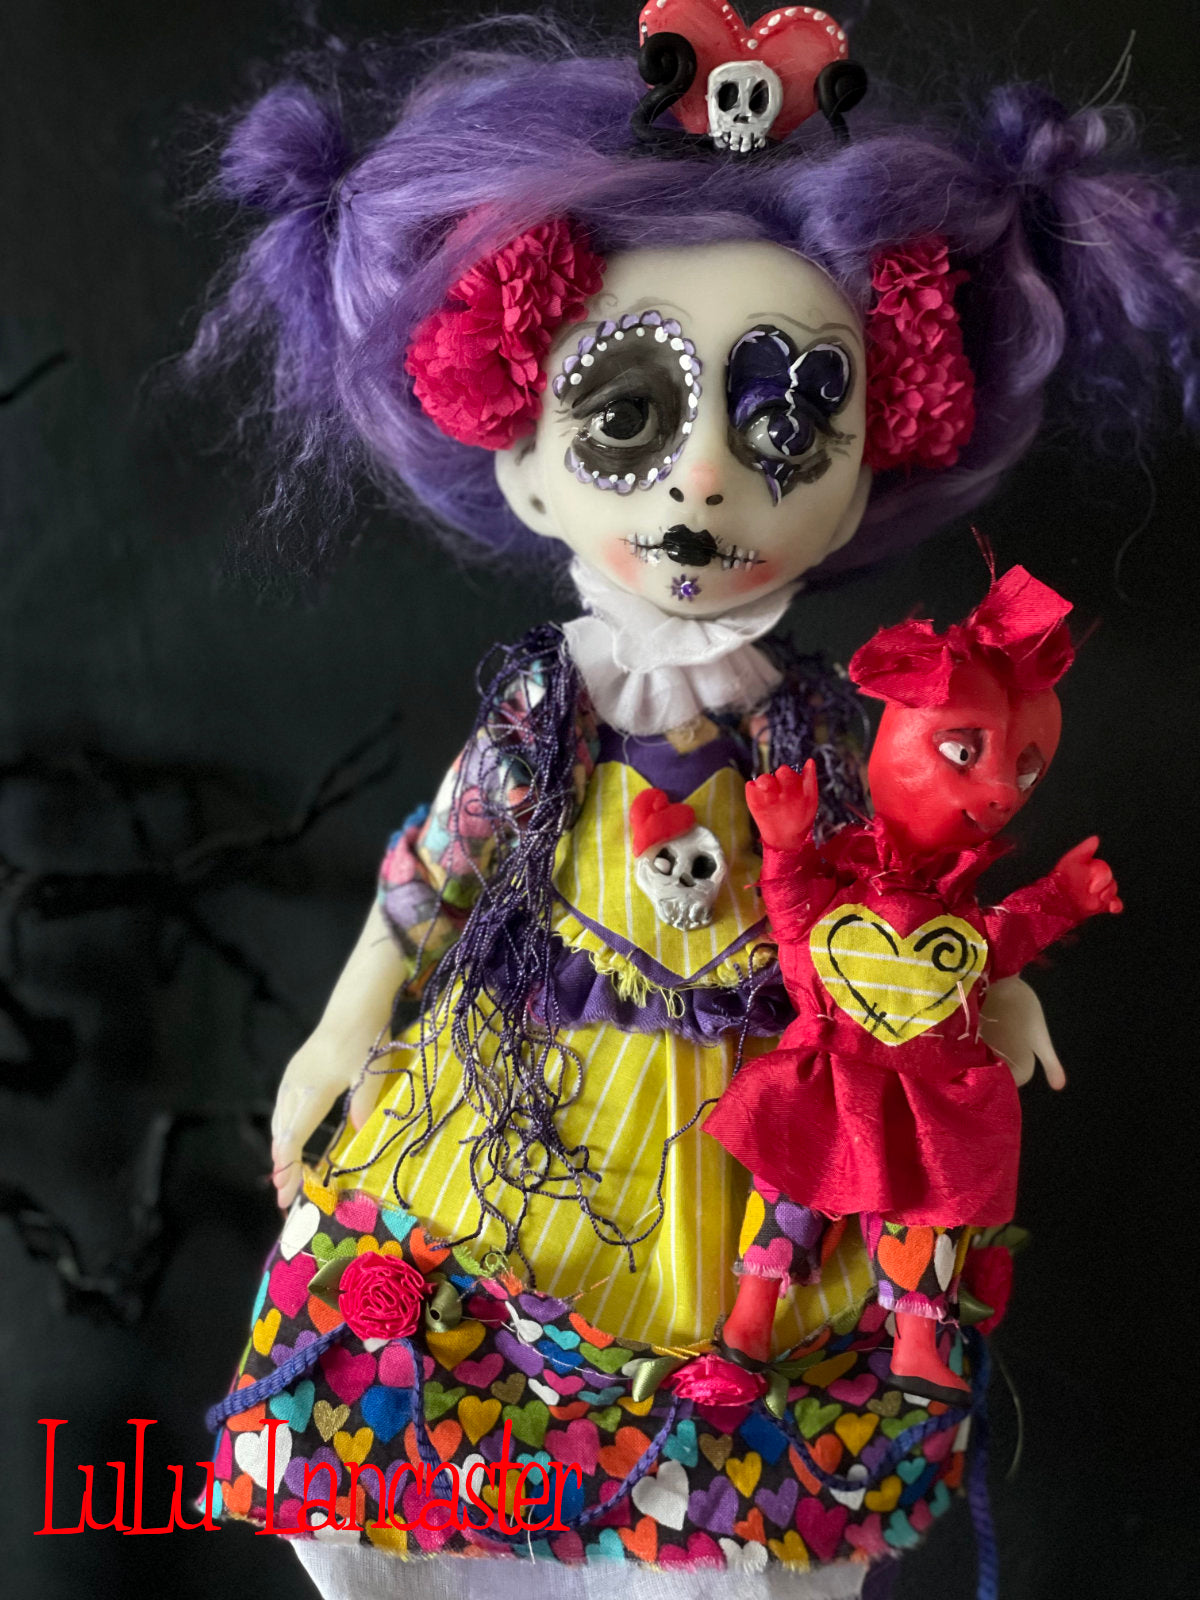 Lamora Valentine Muerta death doll  Original LuLu Lancaster Art Doll